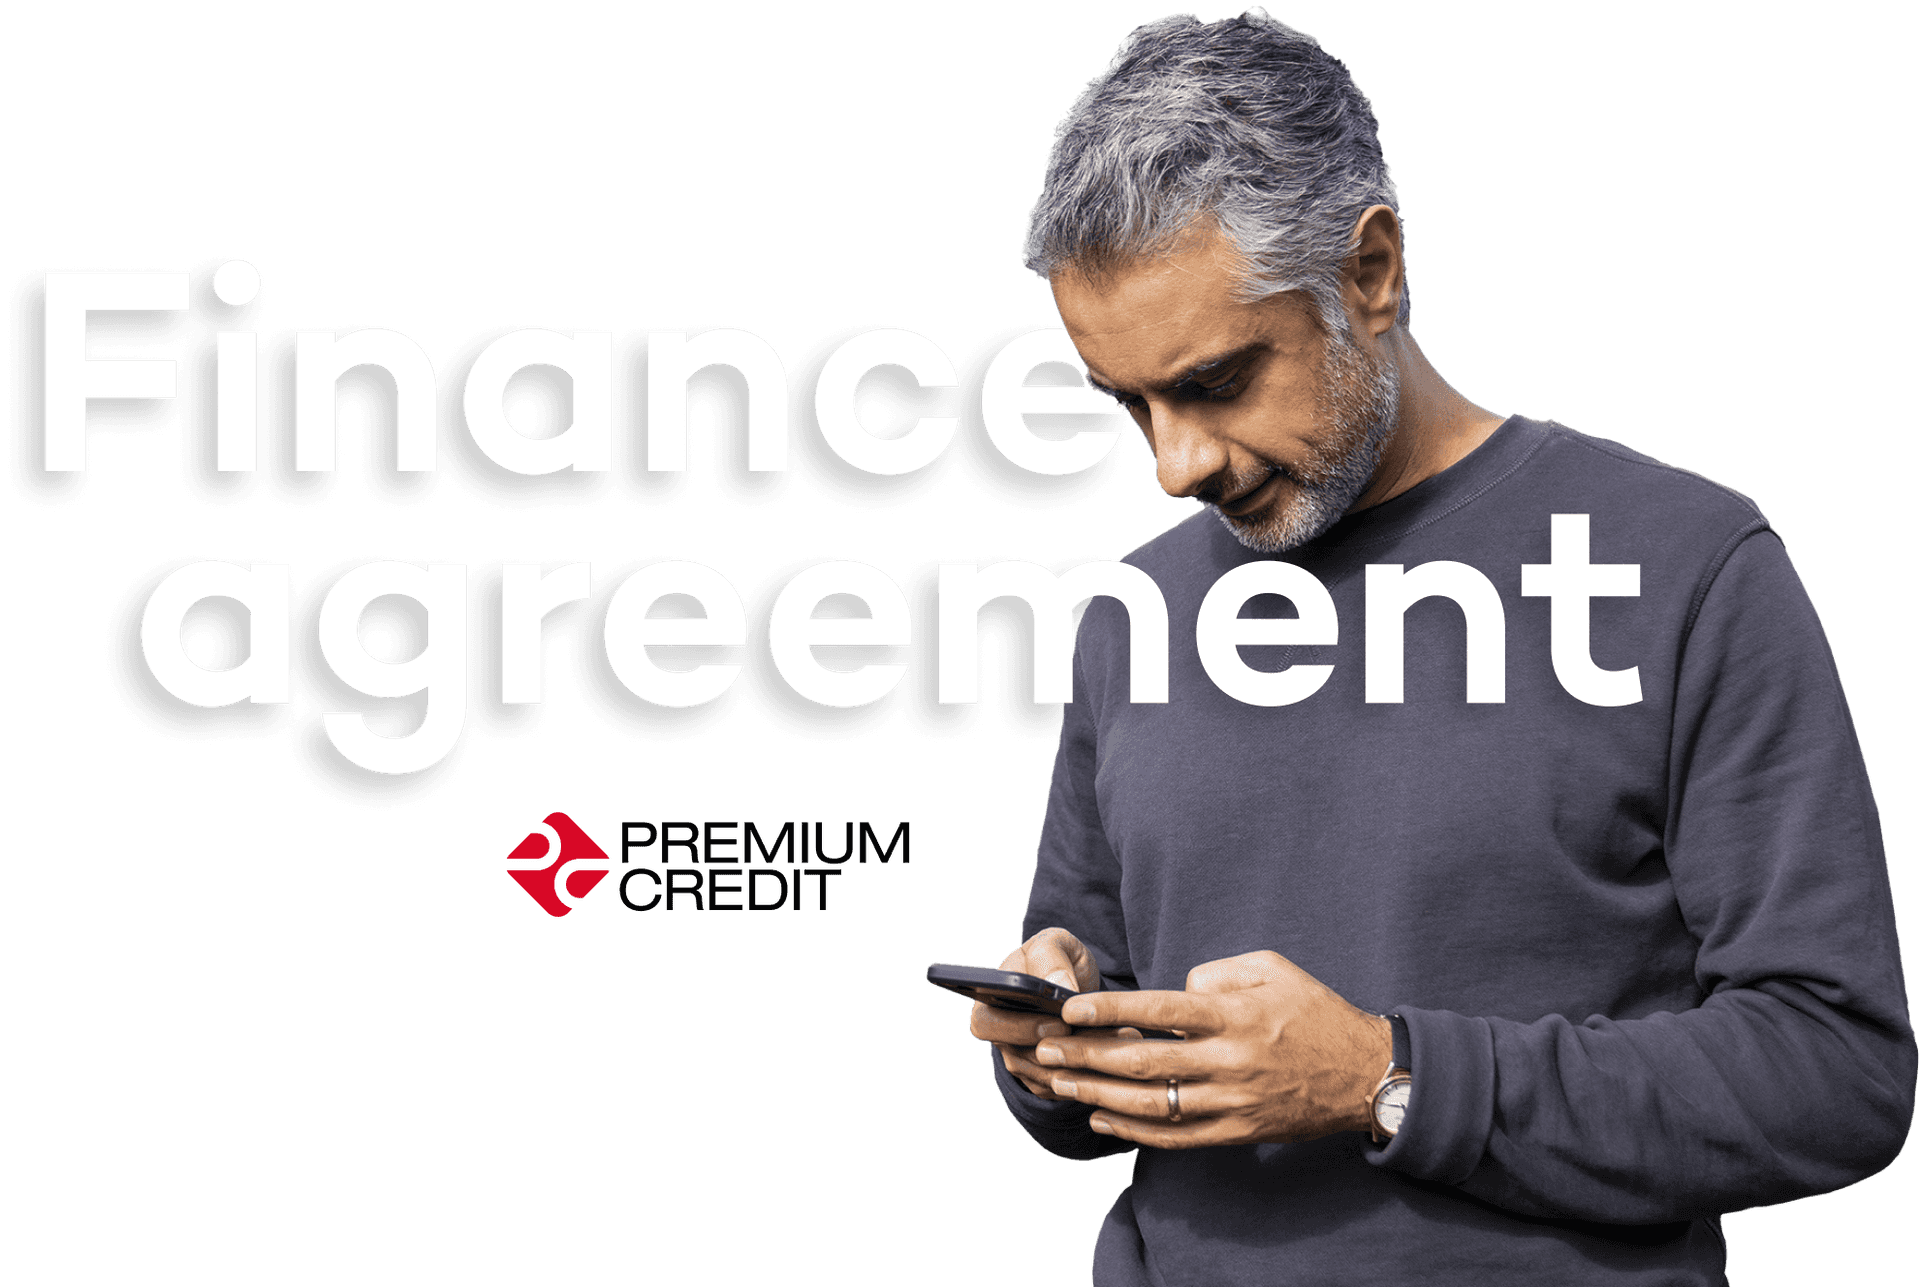 Finance agreement. Premium Credit